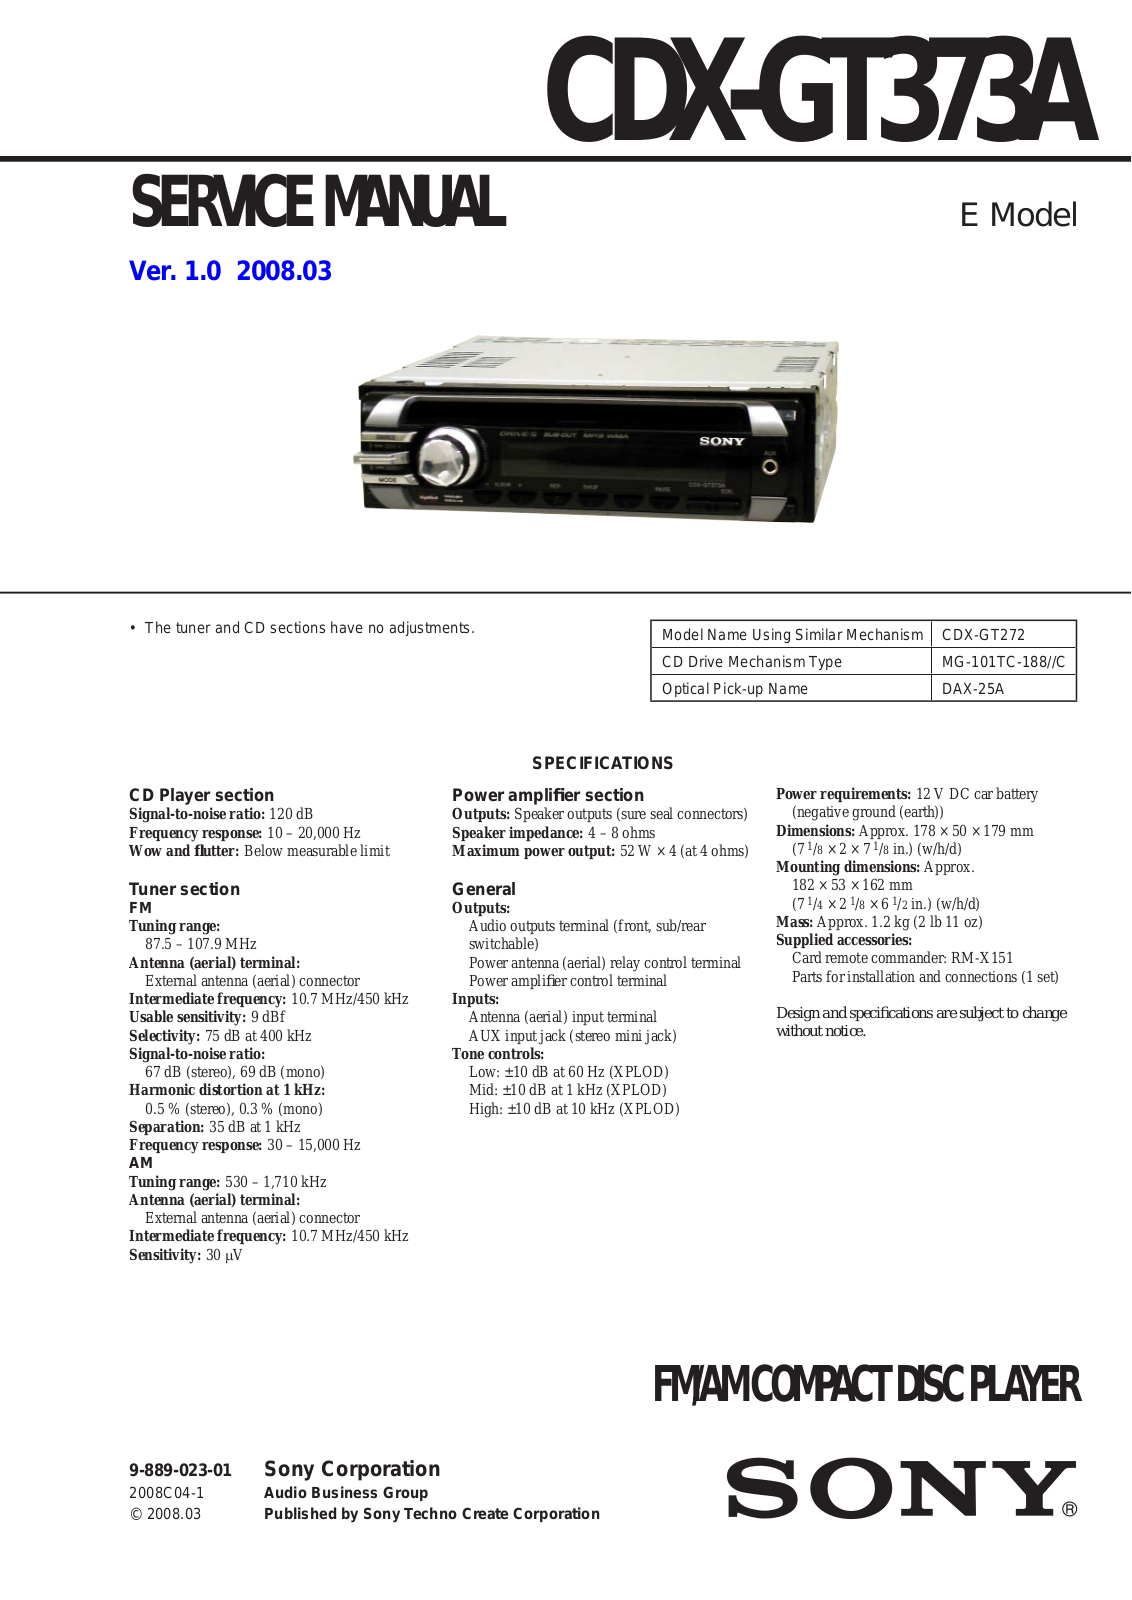 SONY cdx gt373a Service Manual